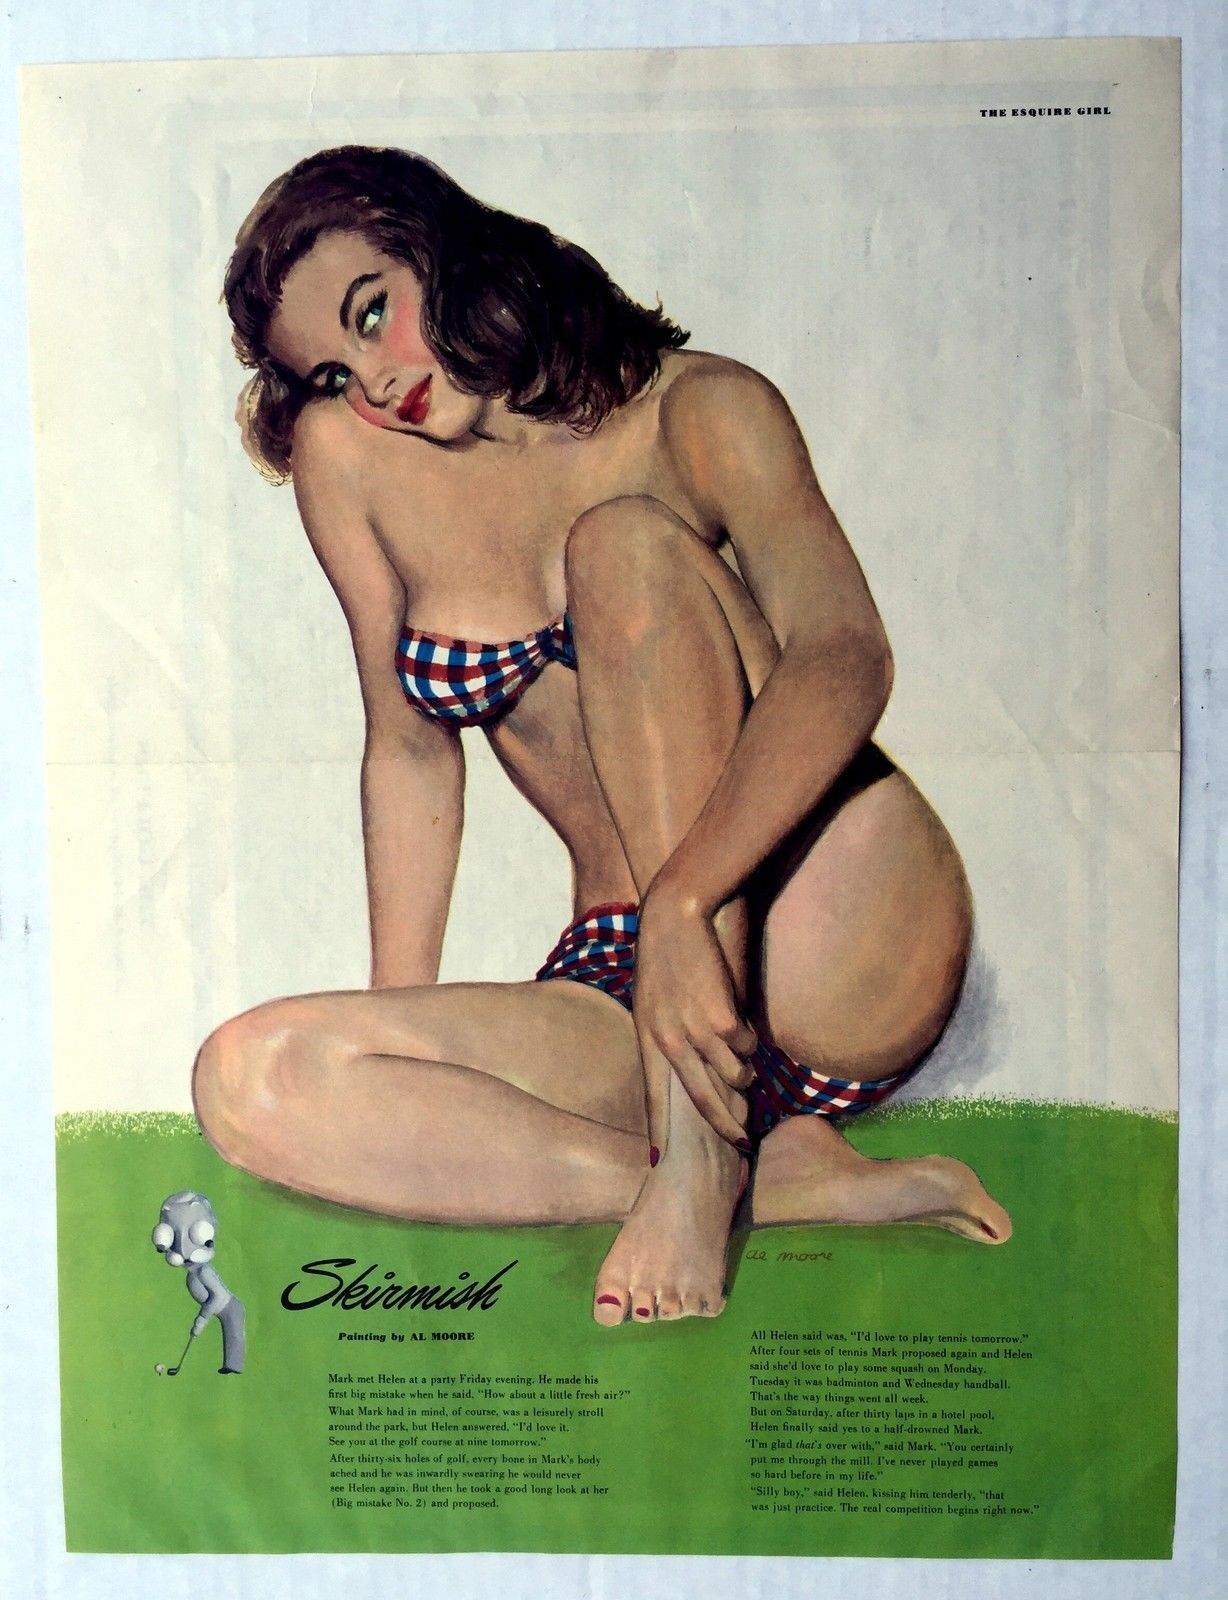 1948 Esquire Magazine Centerfold Plaid Bikini Pinup Girl Picture by Al Moore